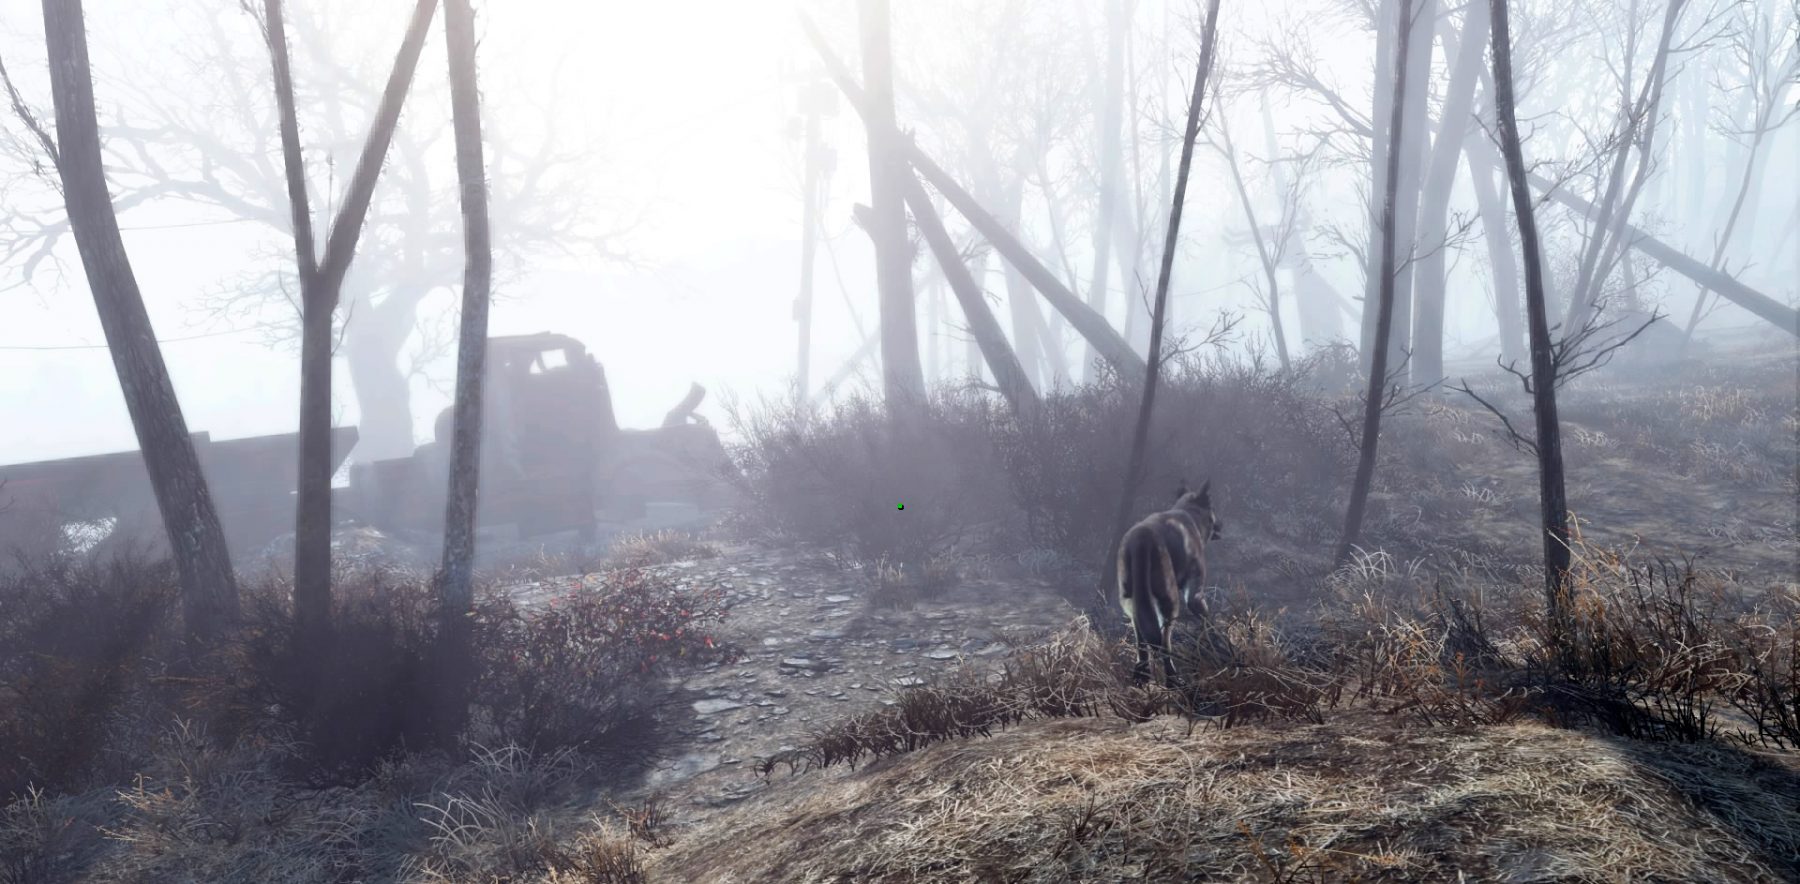 Fallout 4's natural world